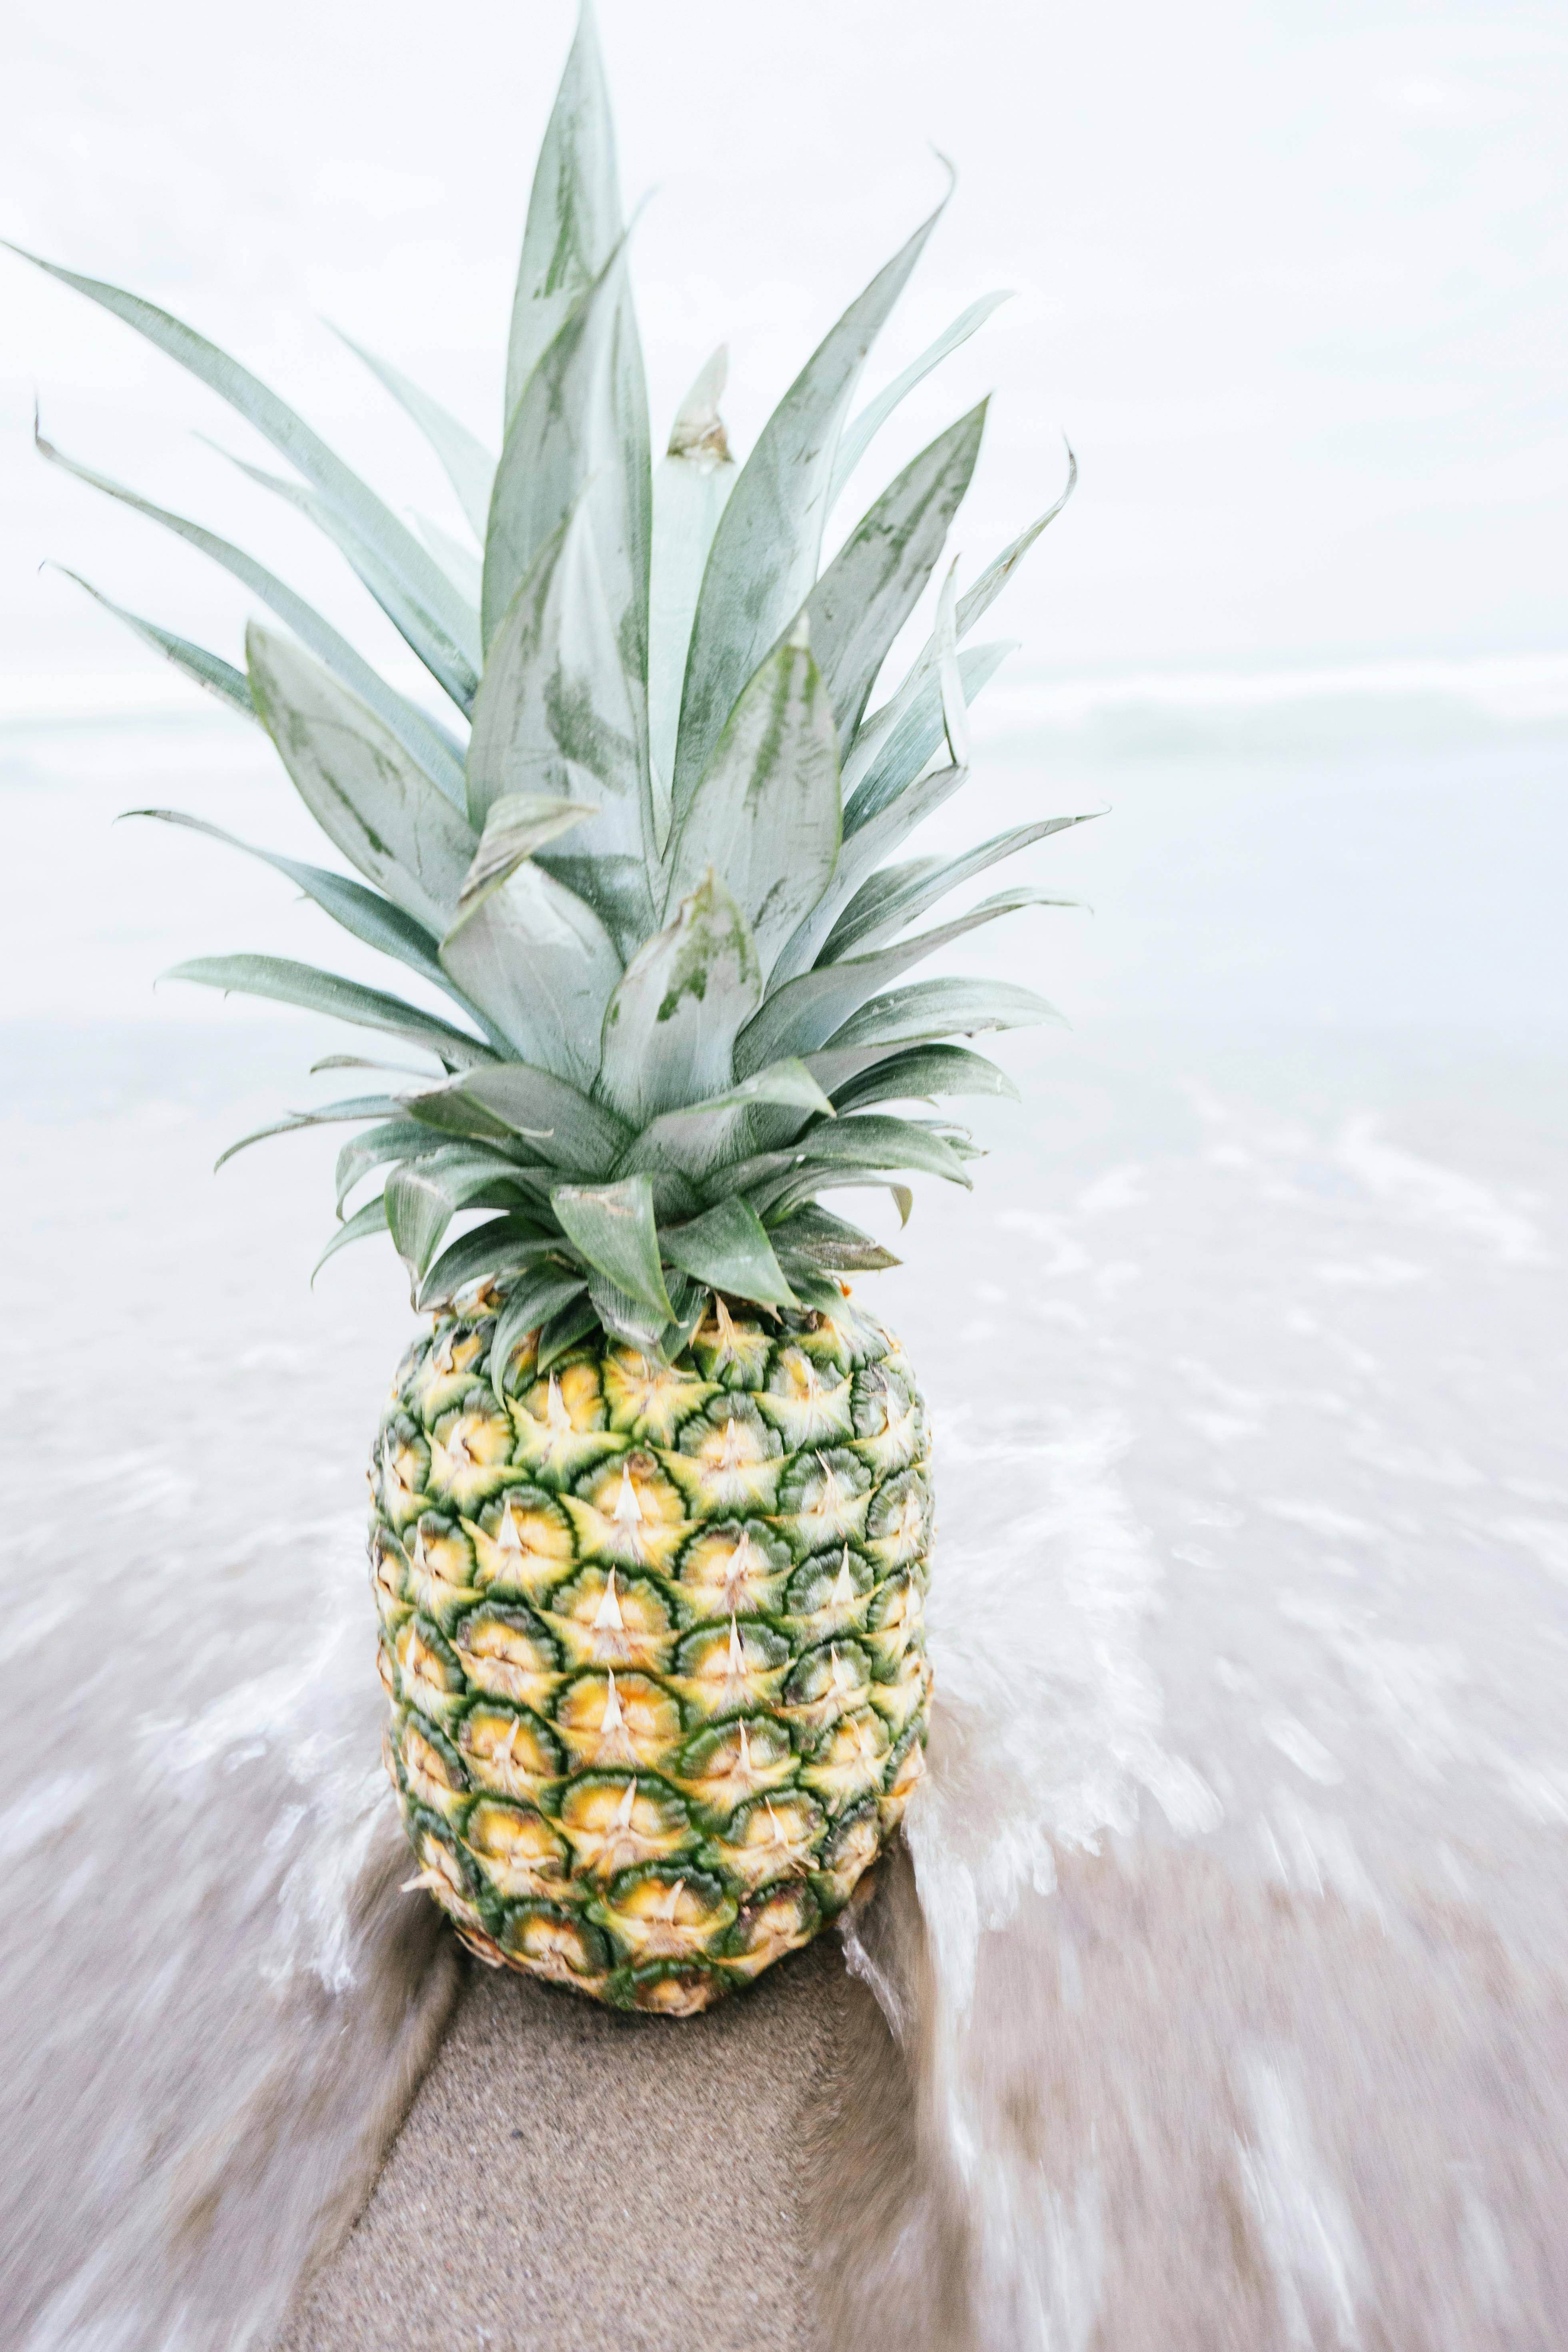 Ripe Pineapple Fruit · Free Stock Photo